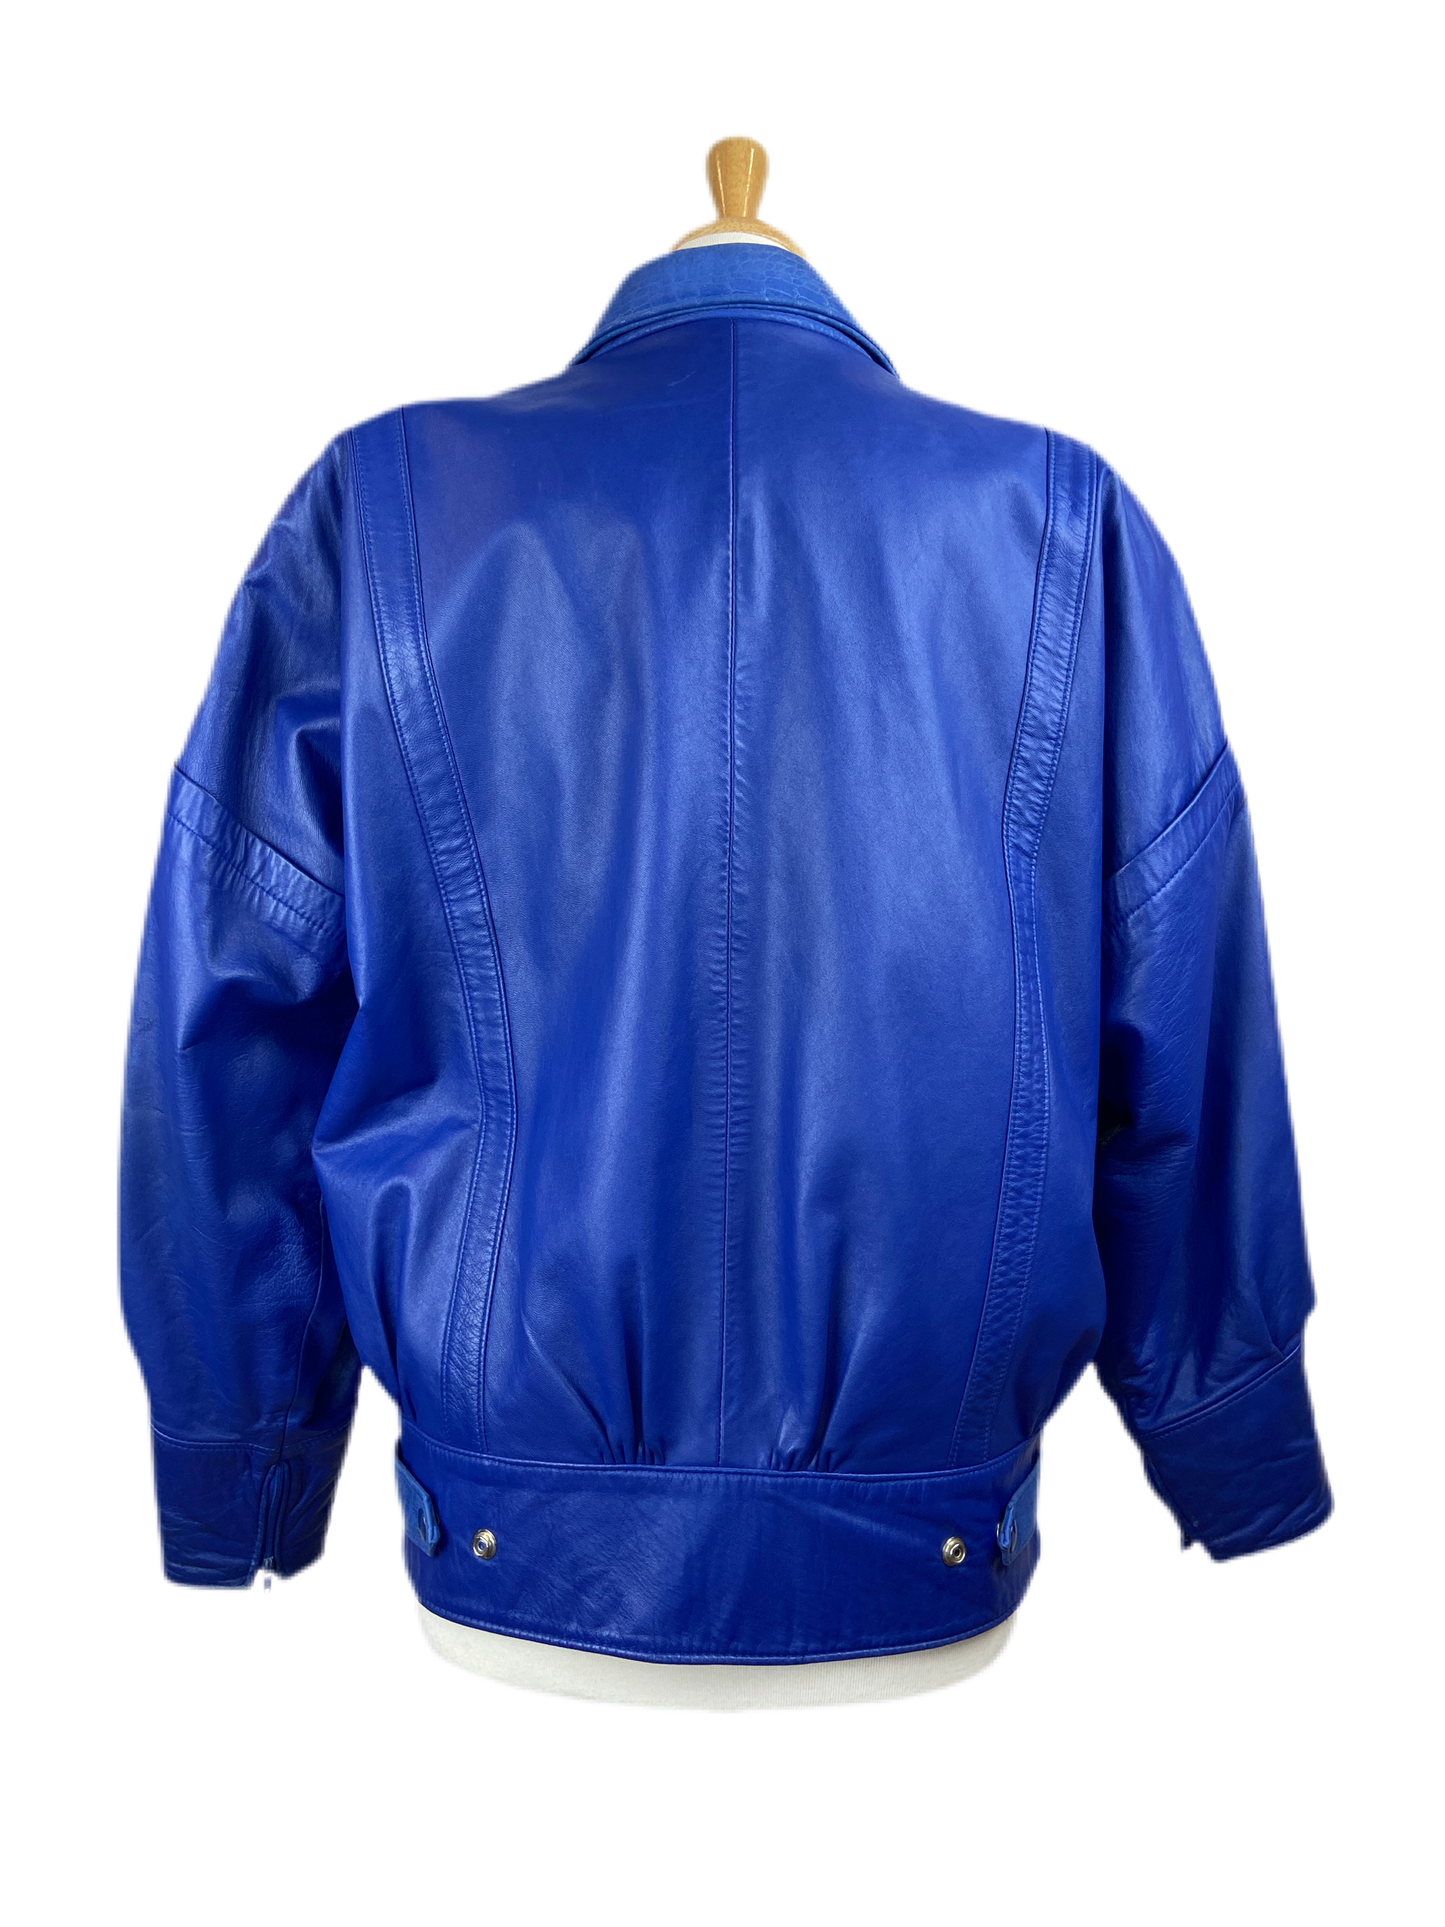 1980's Royal Blue Leather Bomber Jacket (L-XL)